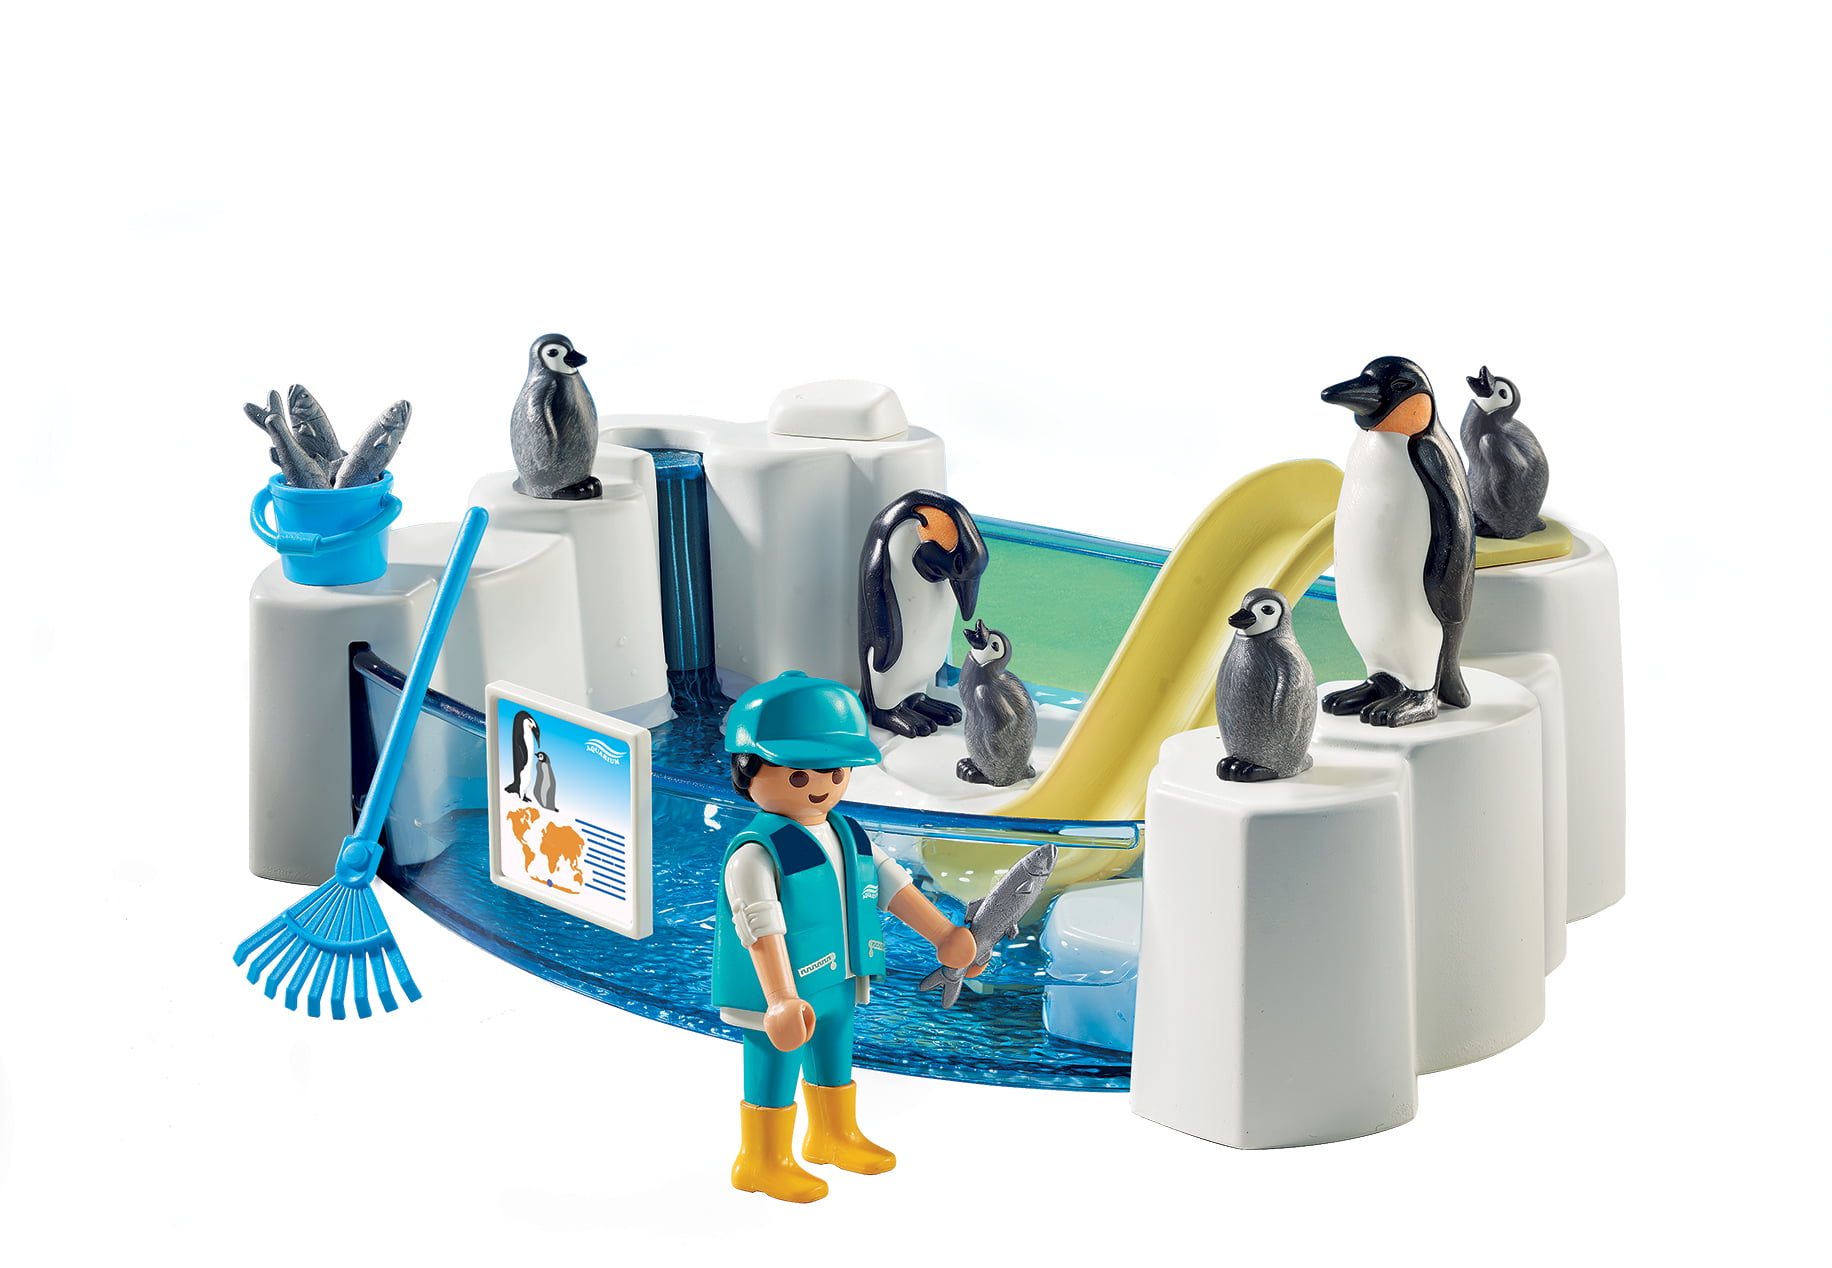 Penguin Diner 🔥 Play online